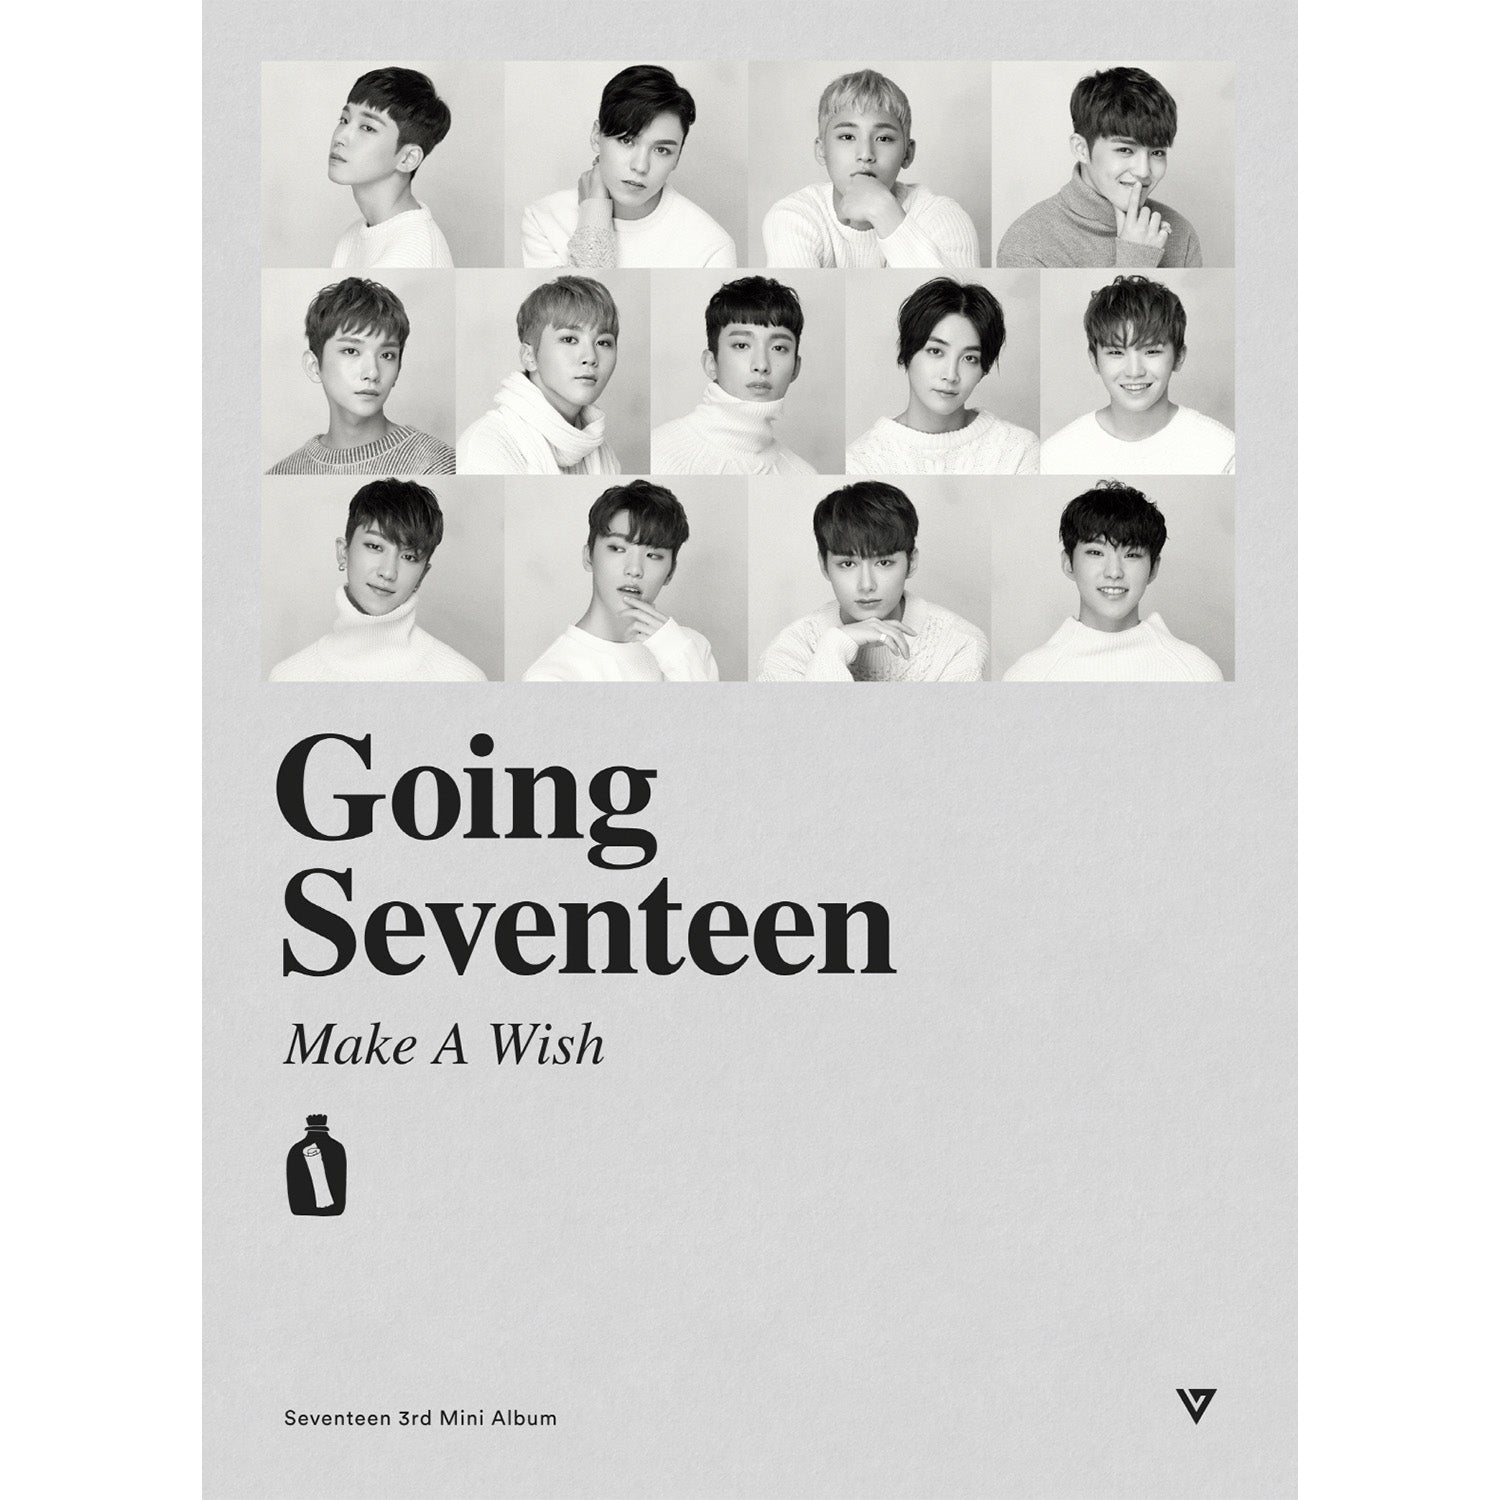 SEVENTEEN 3RD MINI ALBUM 'GOING SEVENTEEN' (RE-RELEASE) MAKE A WISH VERSION COVER